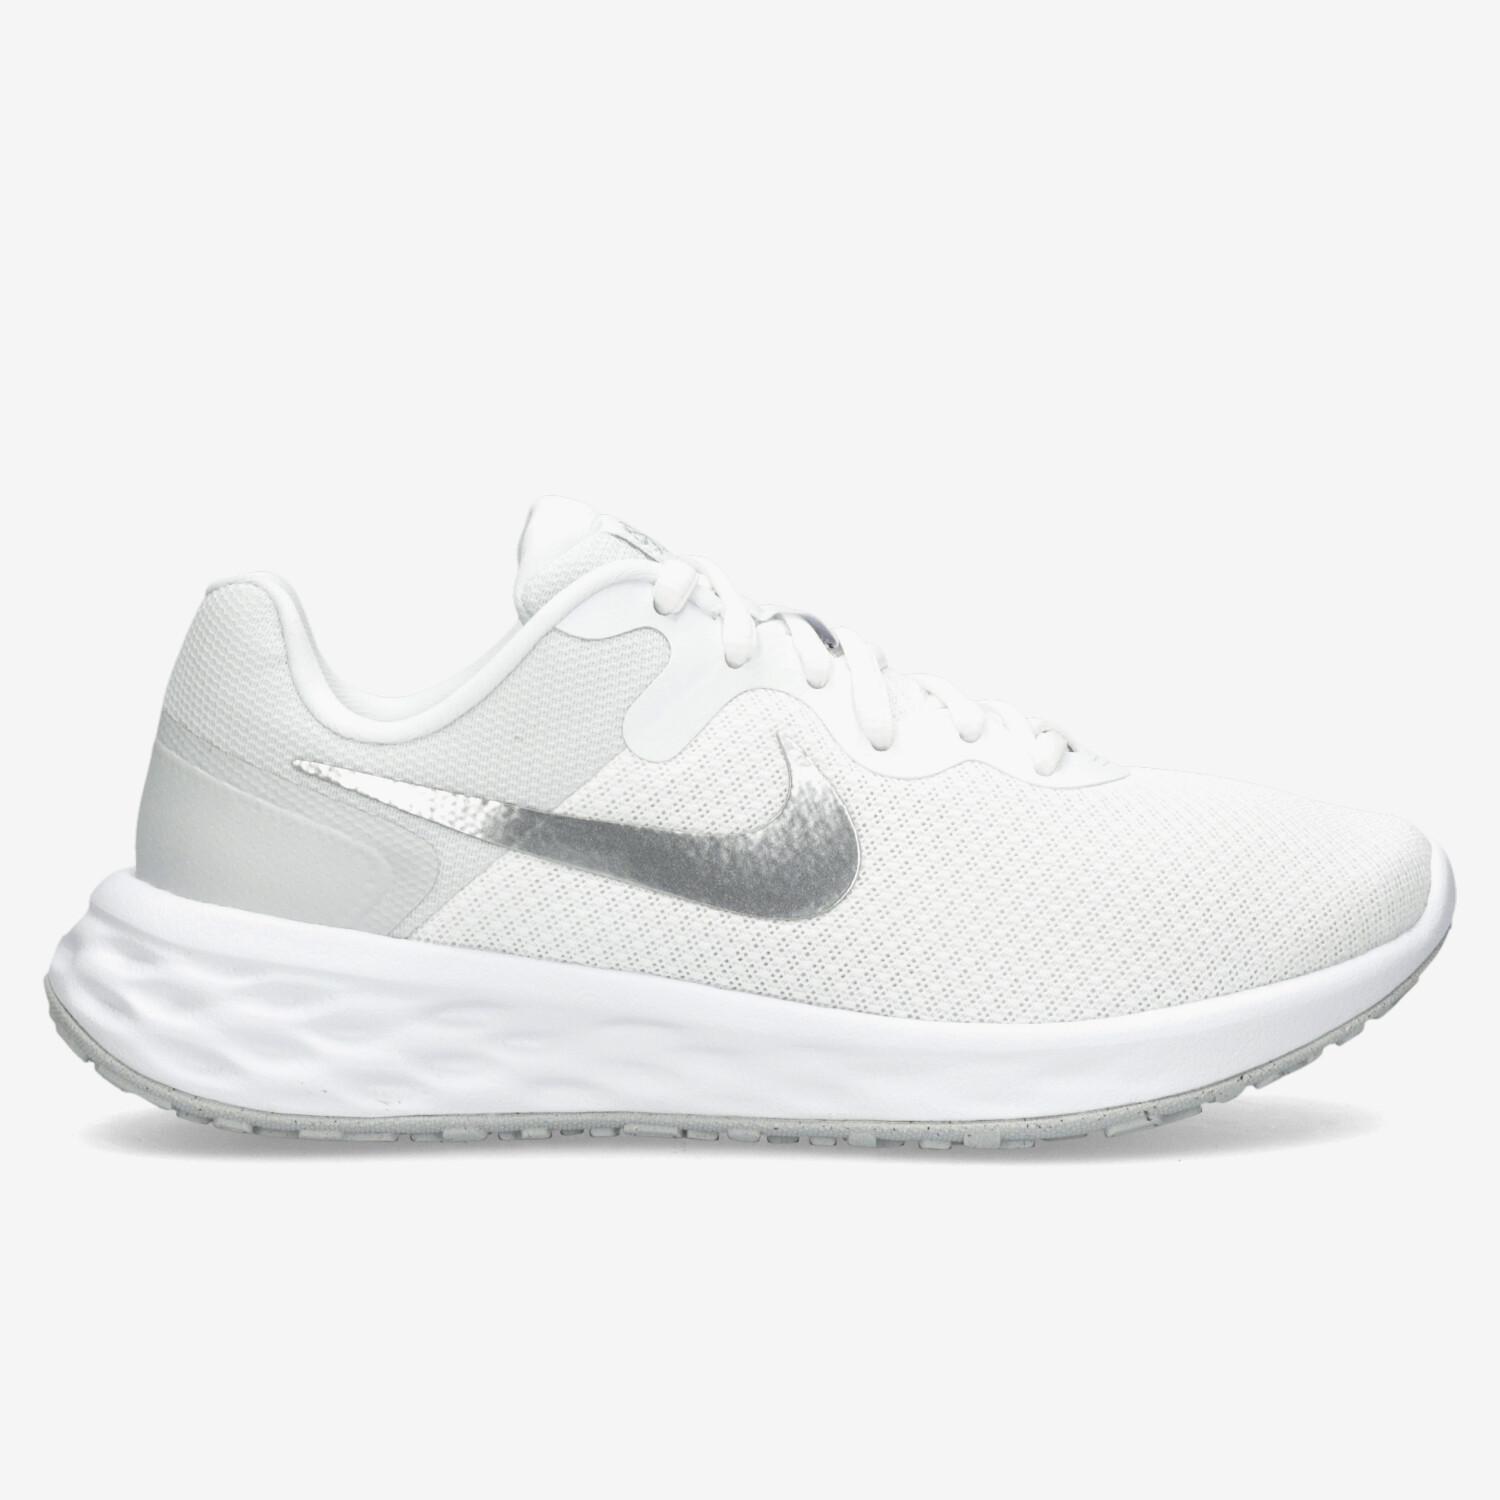 Precios de Nike Revolution 6 blancas - Ofertas comprar online outlet | Runnea